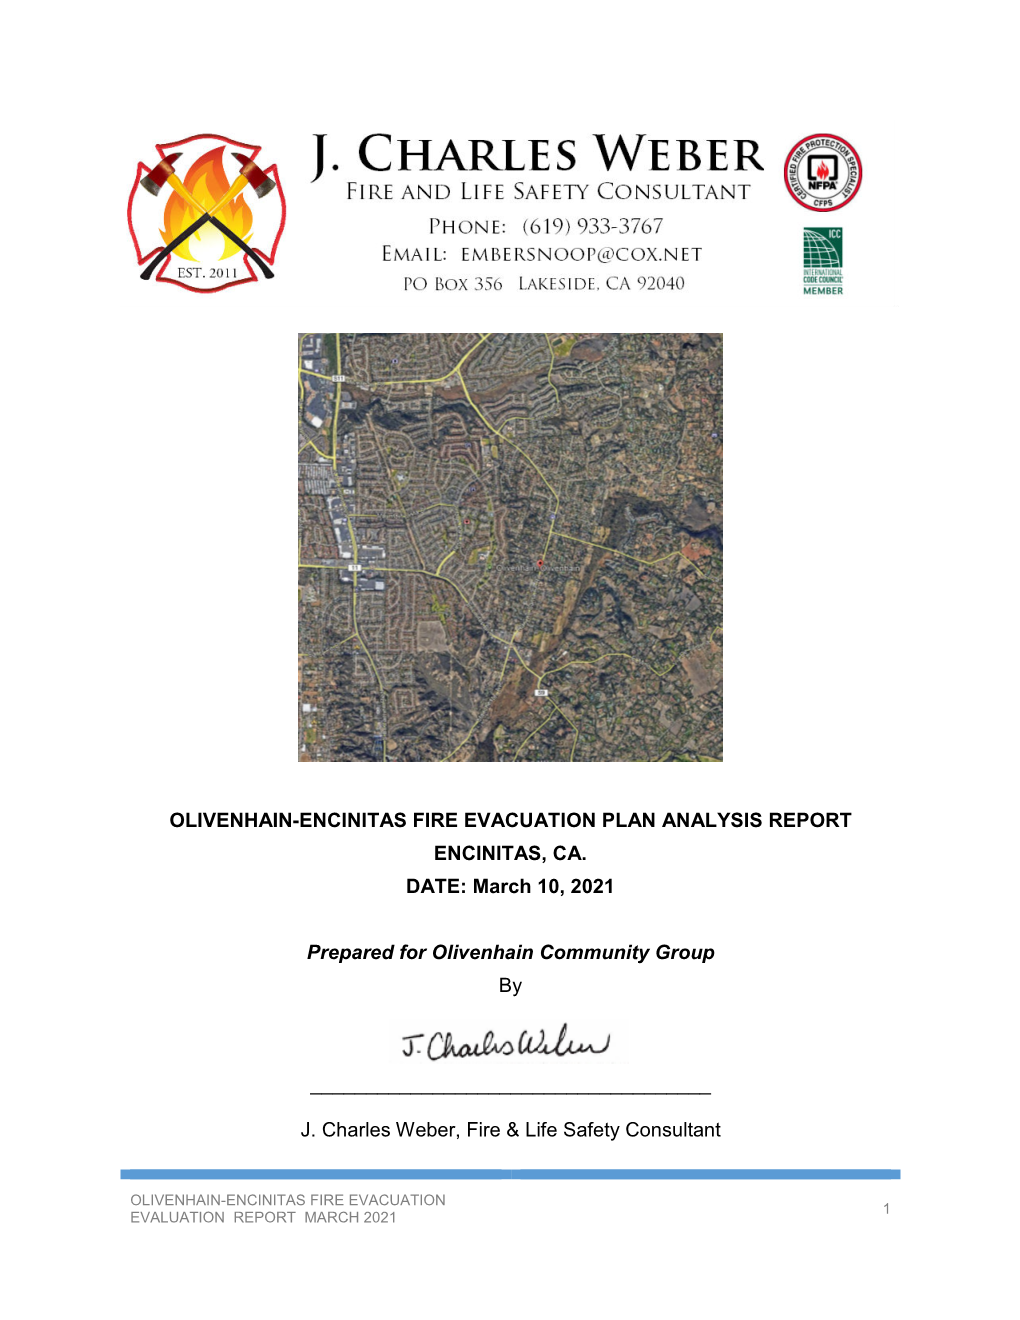 Olivenhain-Encinitas Fire Evacuation Plan Analysis Report Encinitas, Ca